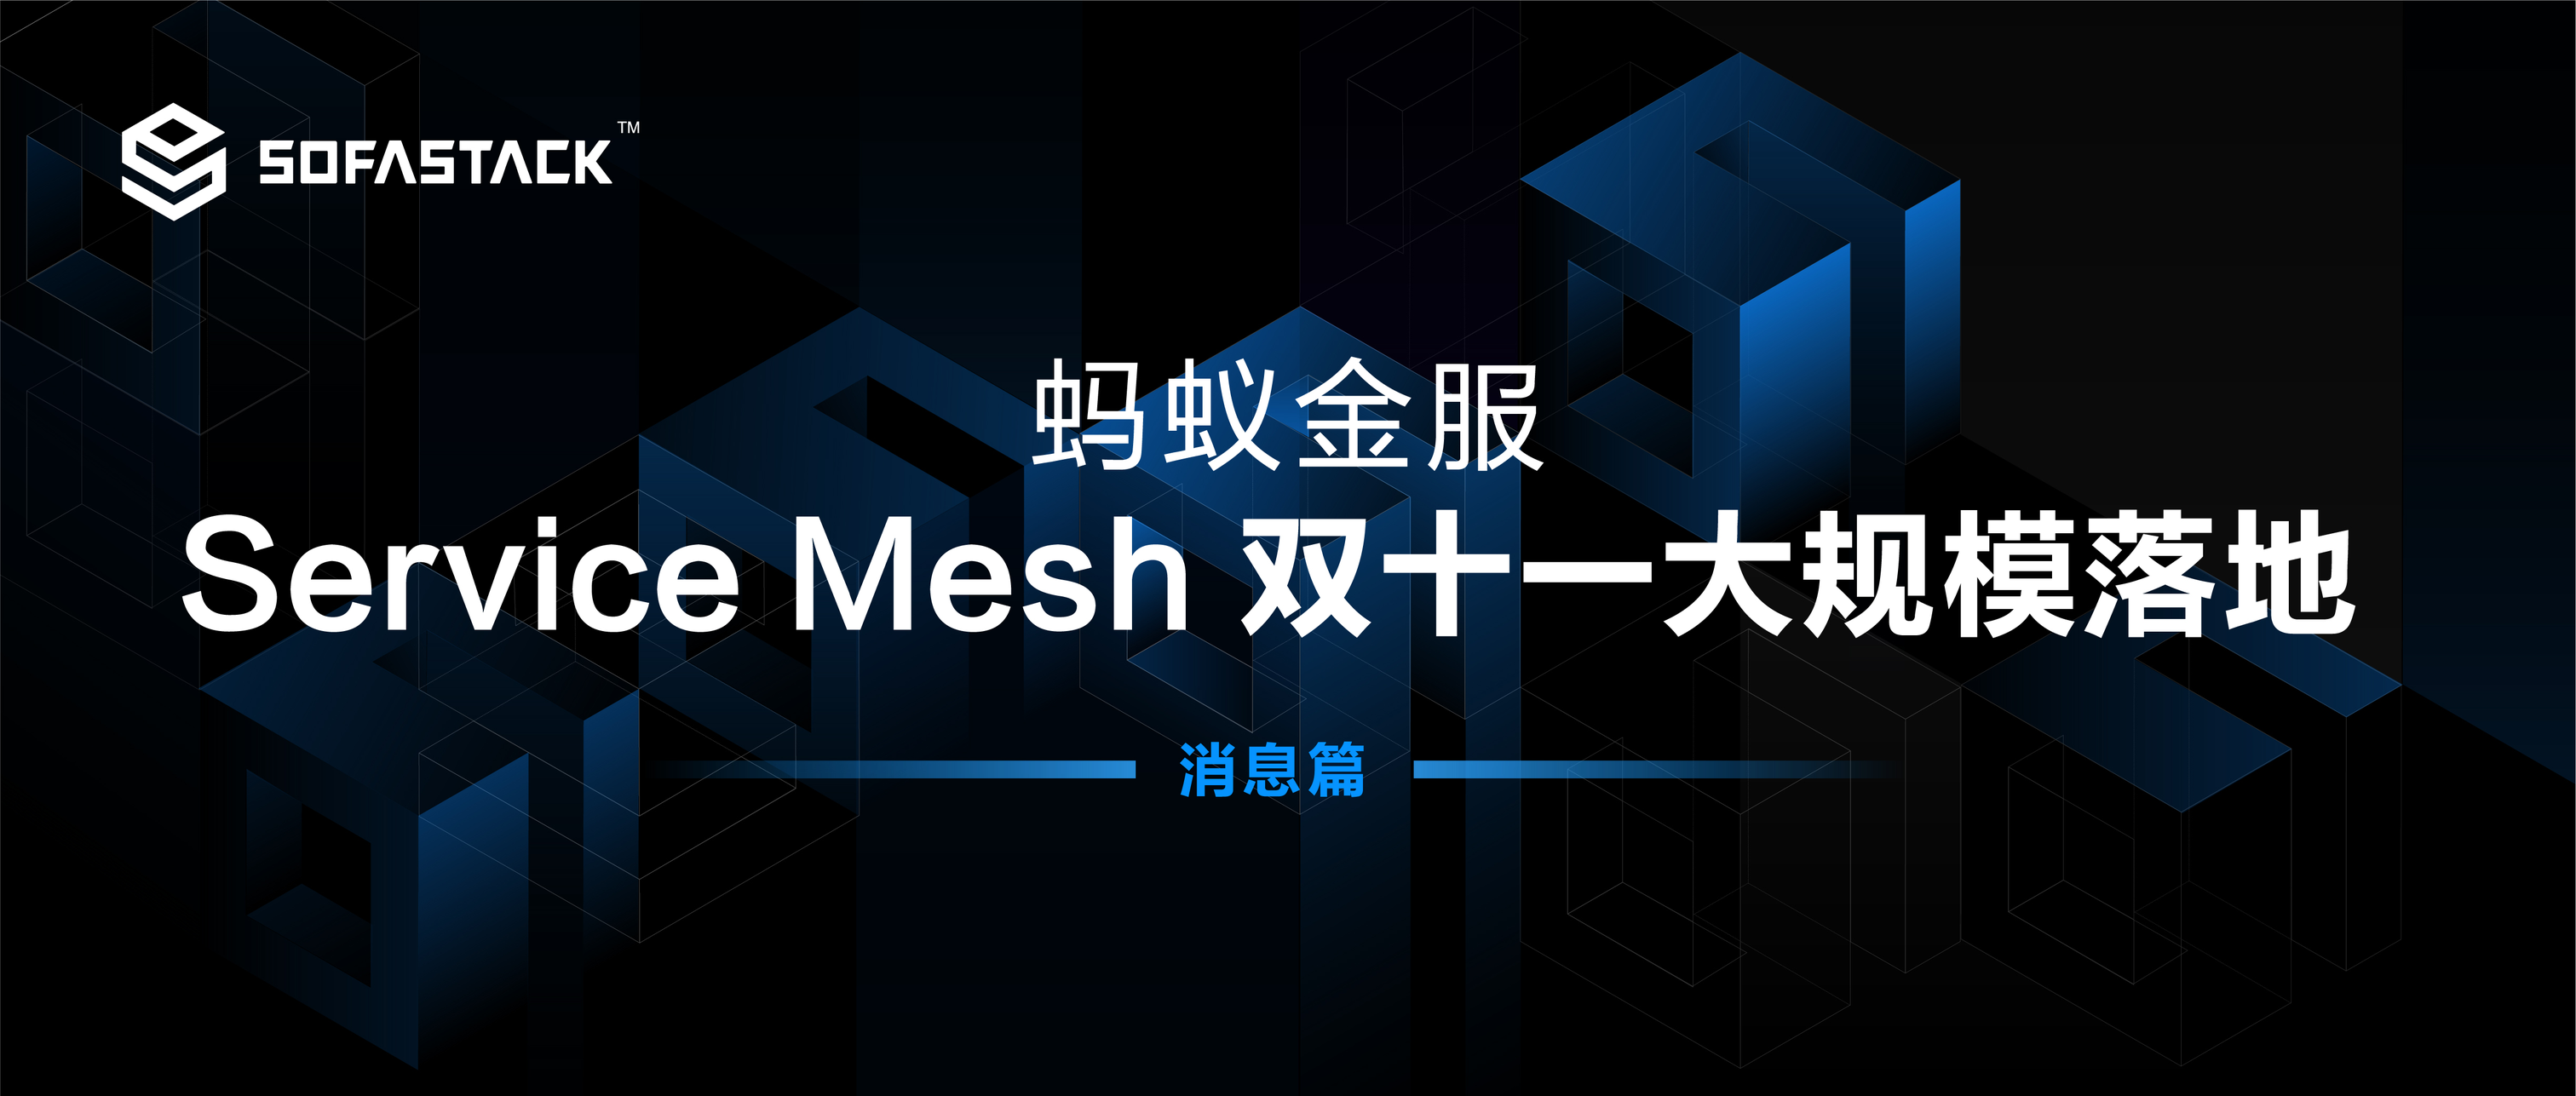 Service Mesh-消息-01.jpg